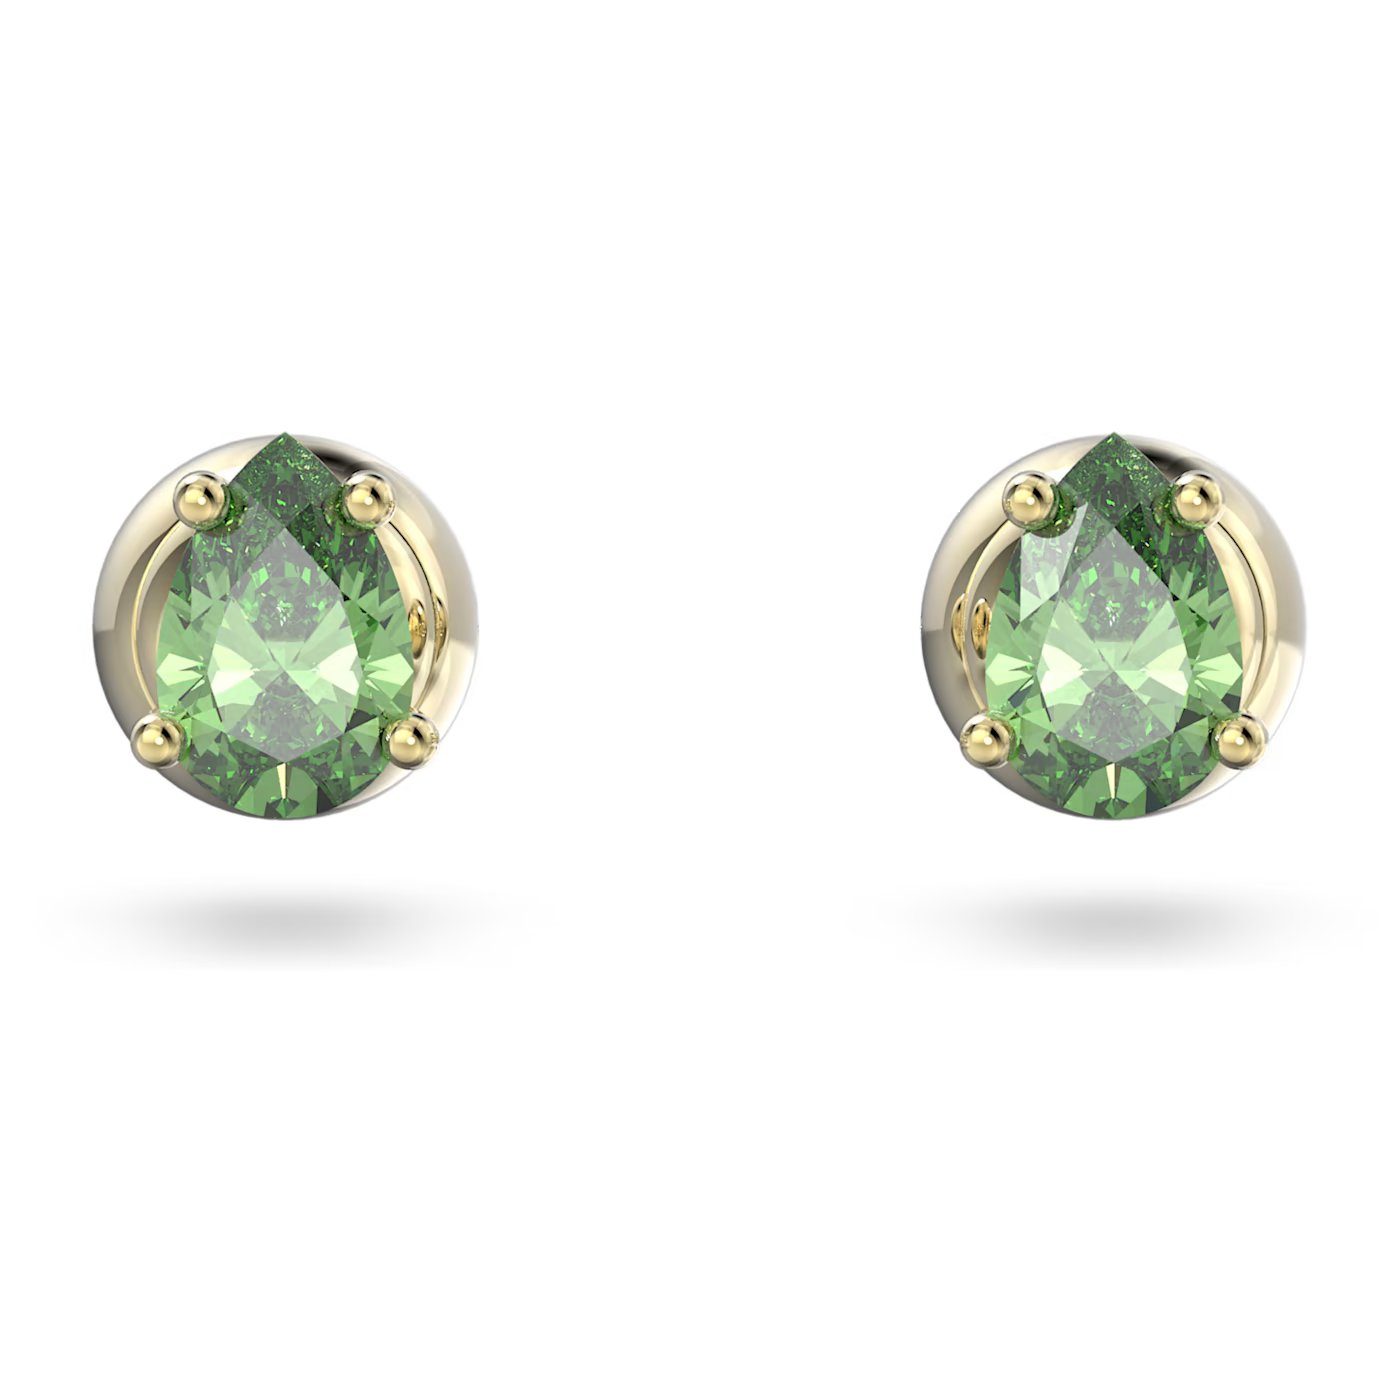 633299c401336_px-stilla-stud-earrings--pear-cut--green--gold-tone-plated-swarovski-5639120.jpg